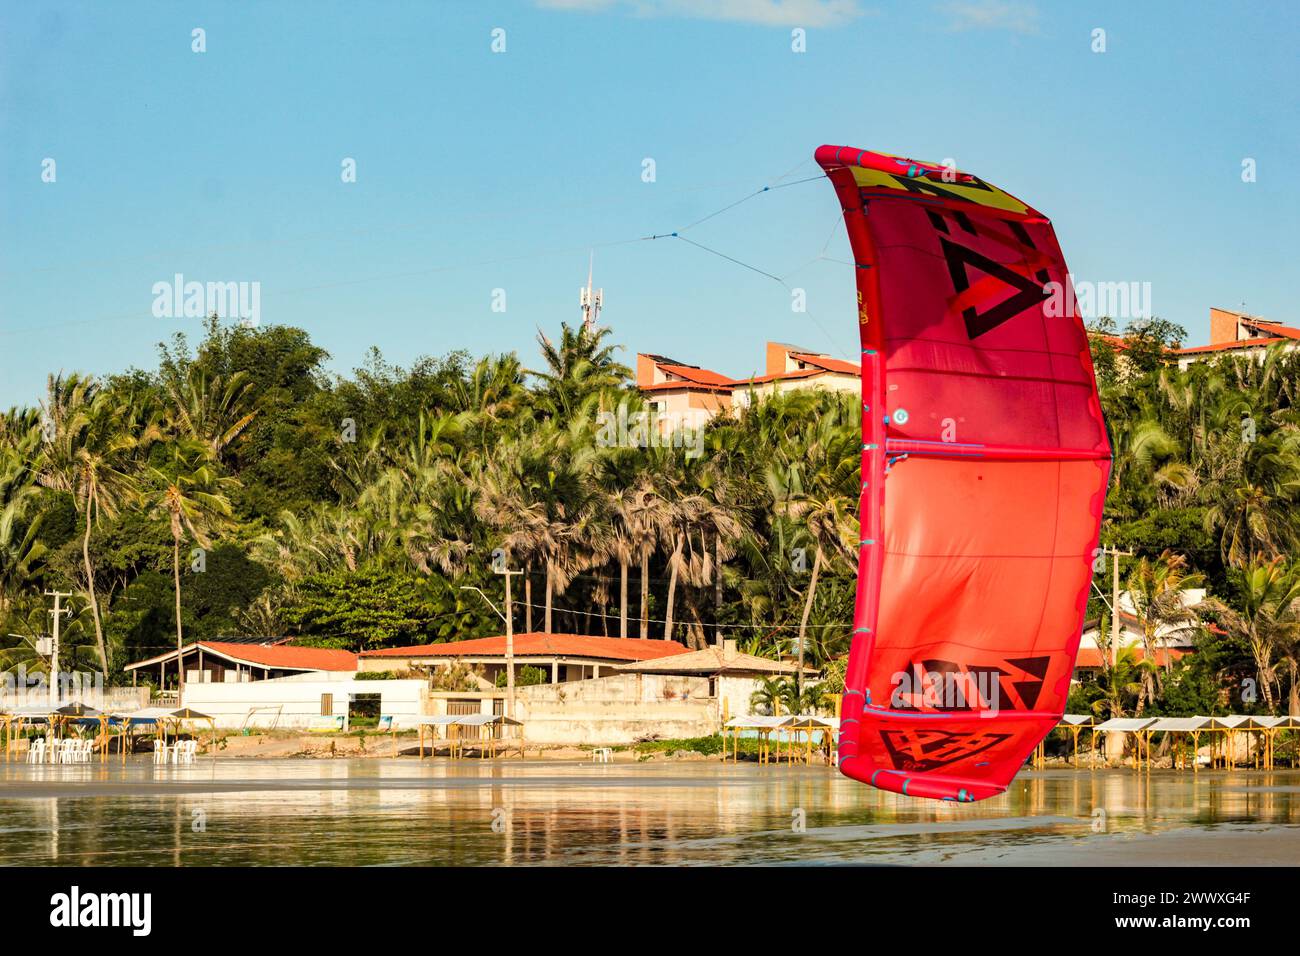 Ein rotes Kitesurfsegel am Strand von Olho d'Água, Insel Maranhão, Bundesstaat São Luís, Nordosten Brasiliens Stockfoto